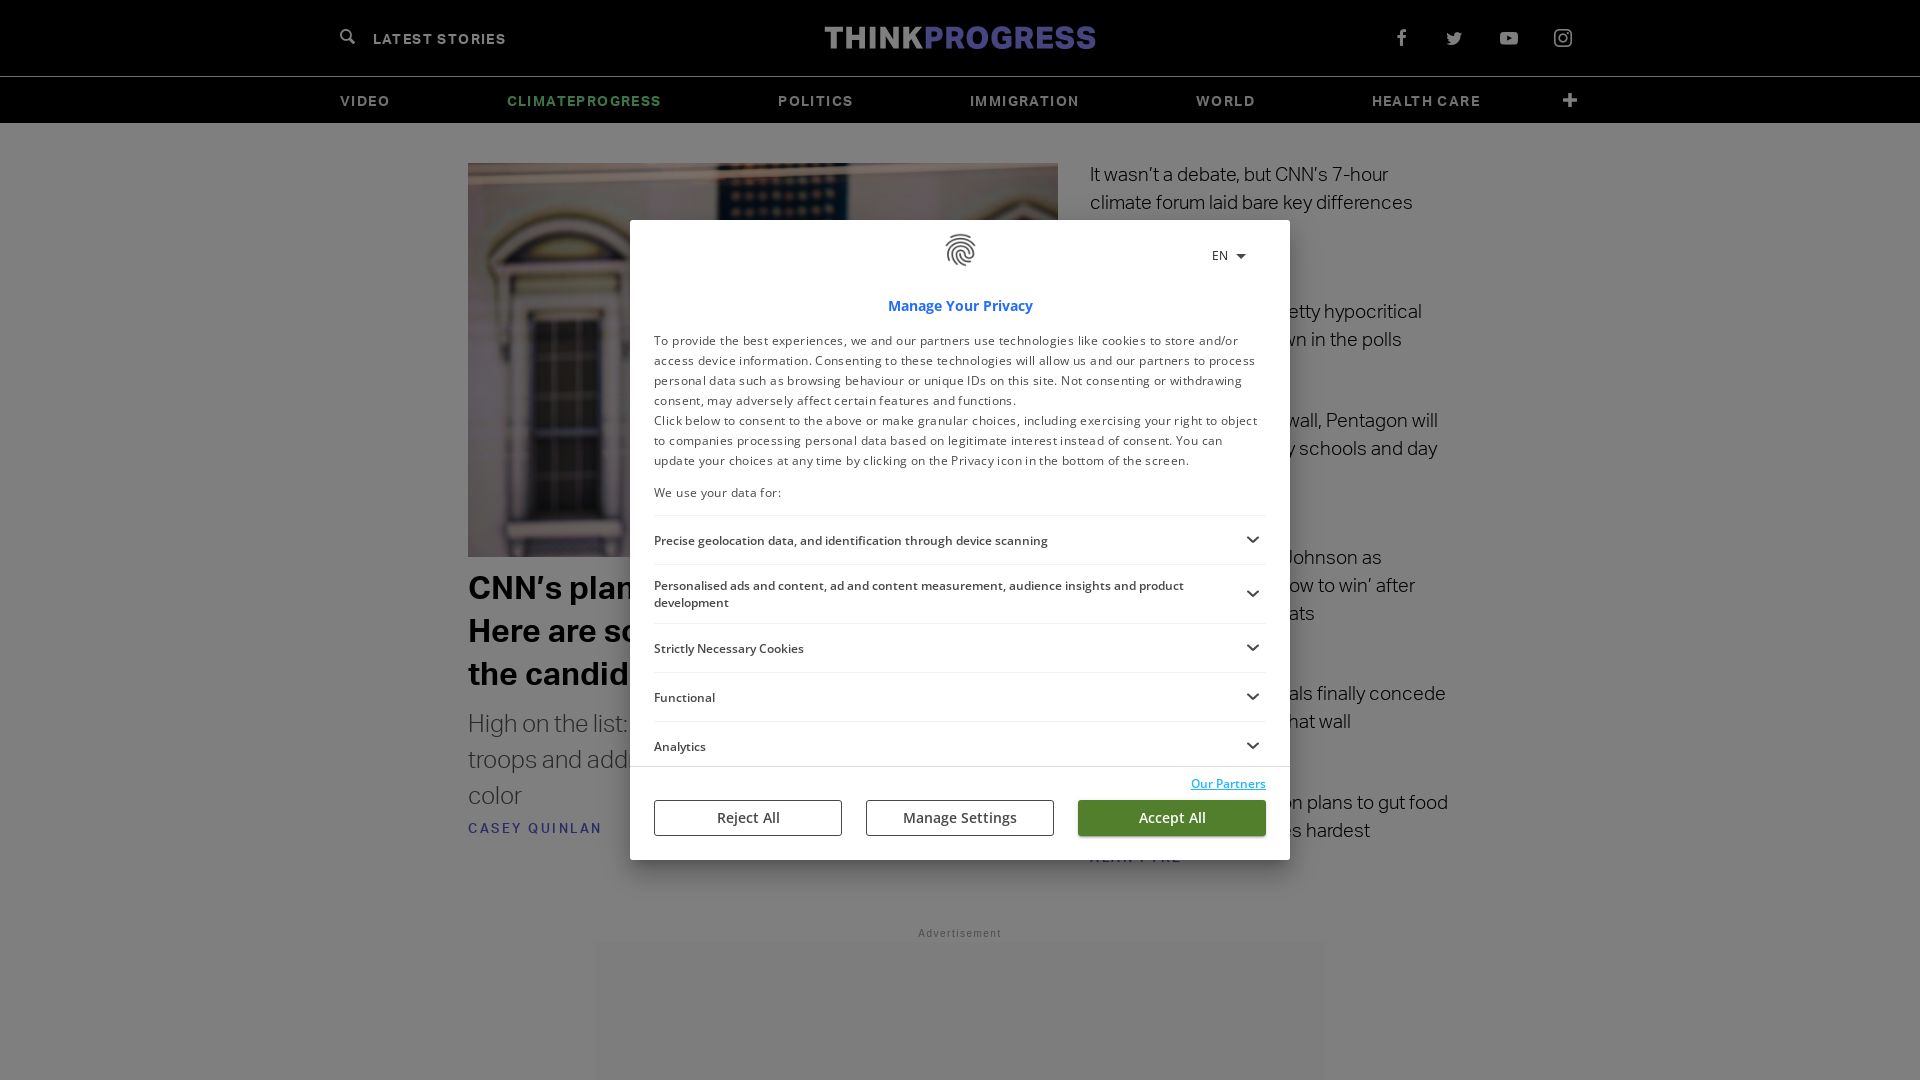 Estado web thinkprogress.org está   ONLINE